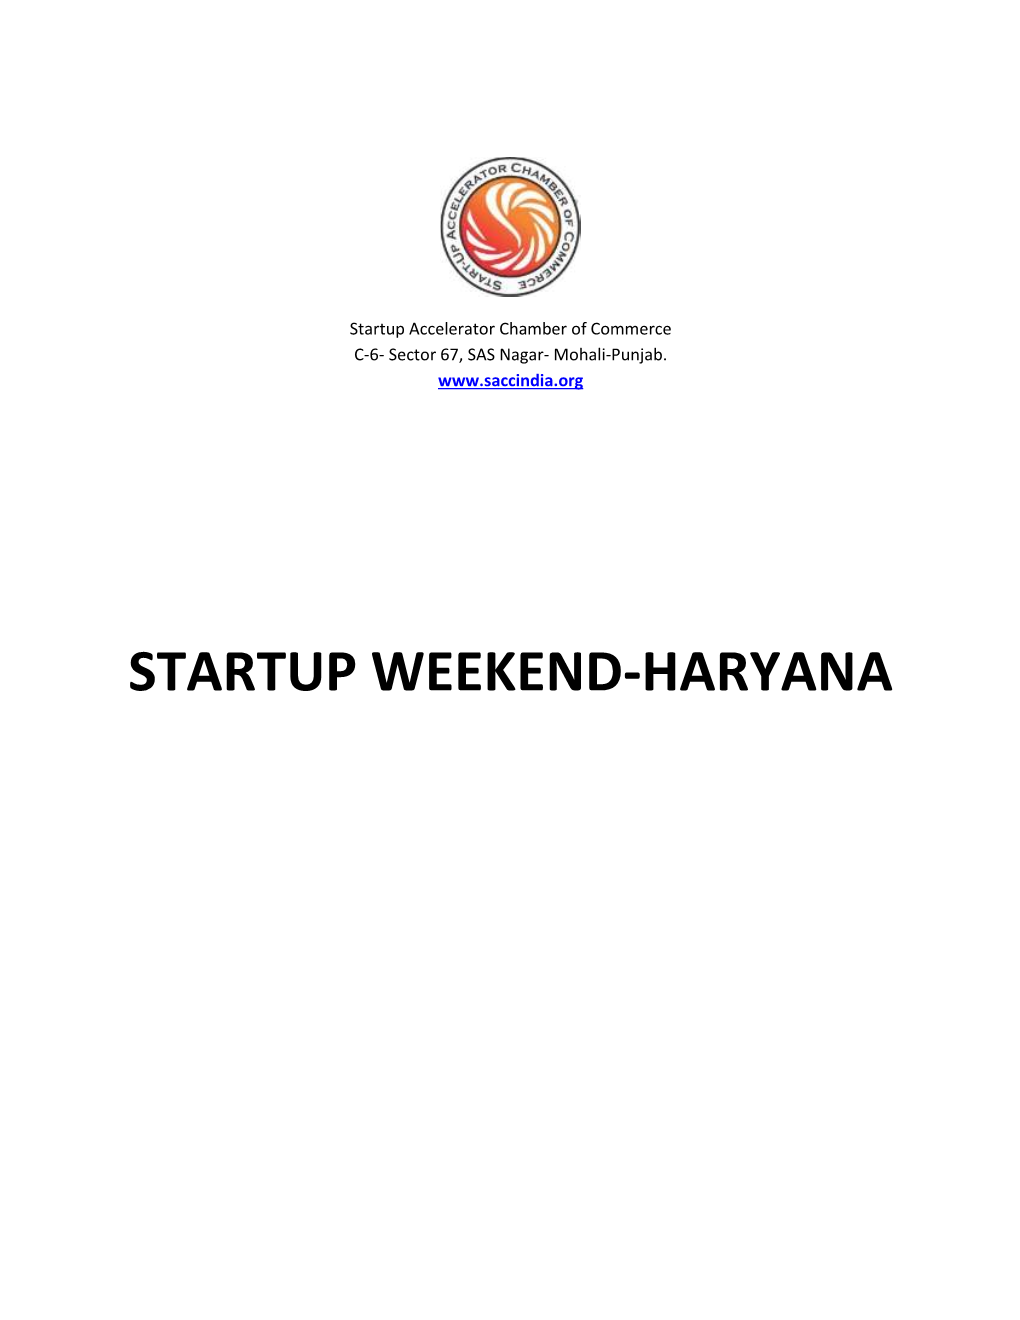 Startup Weekend-Haryana